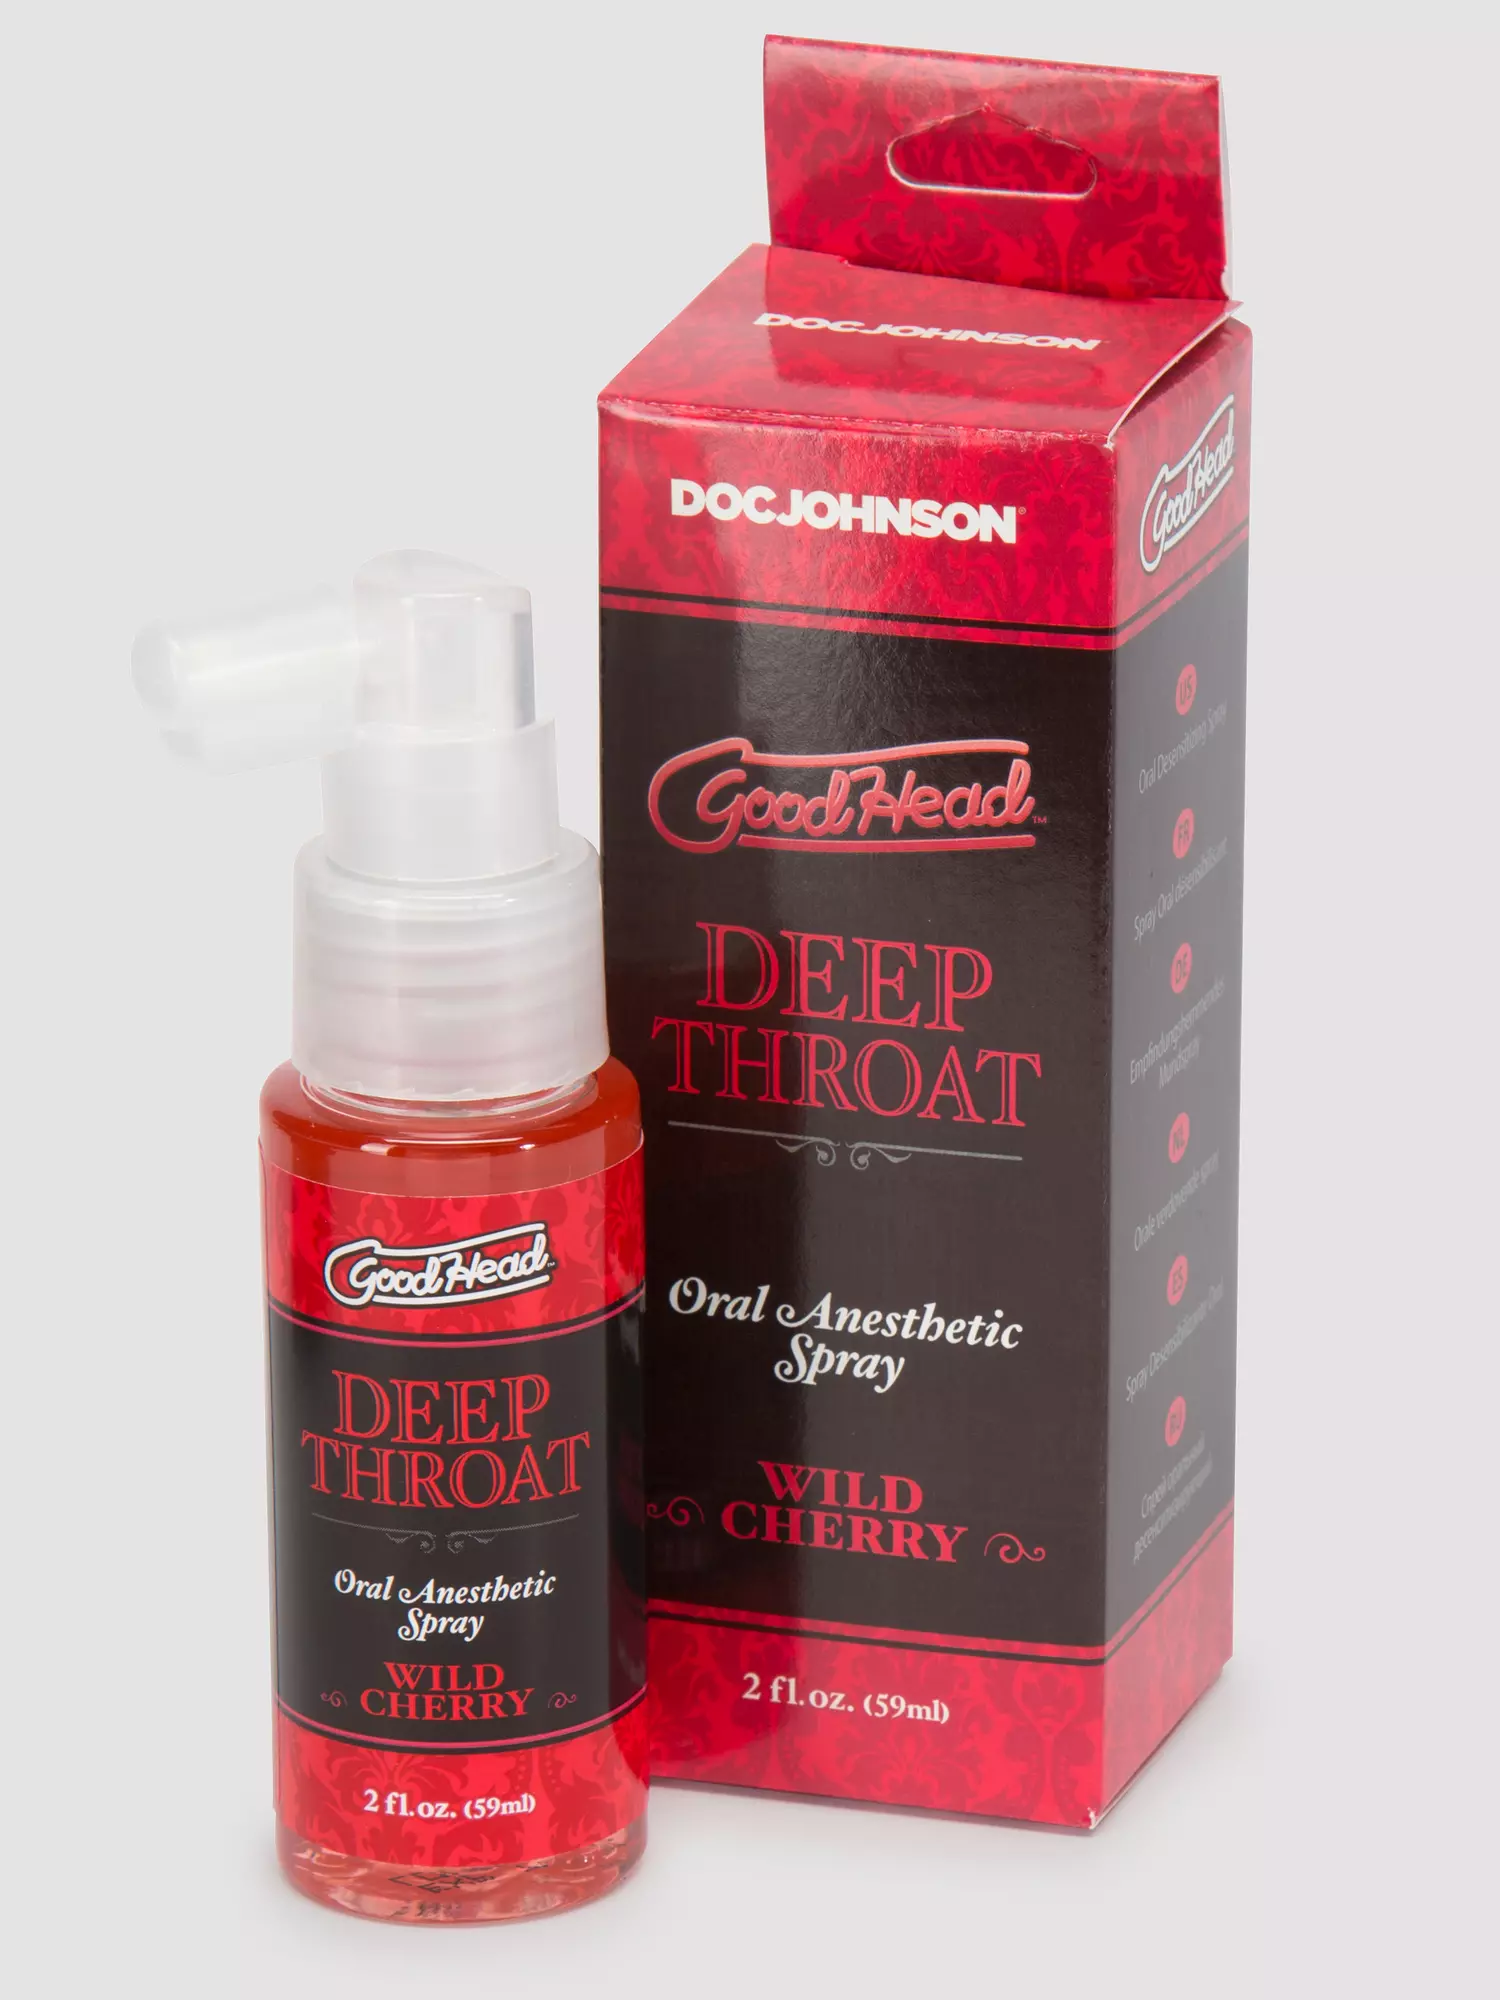 Doc Johnson Good Head Deep Throat Spray